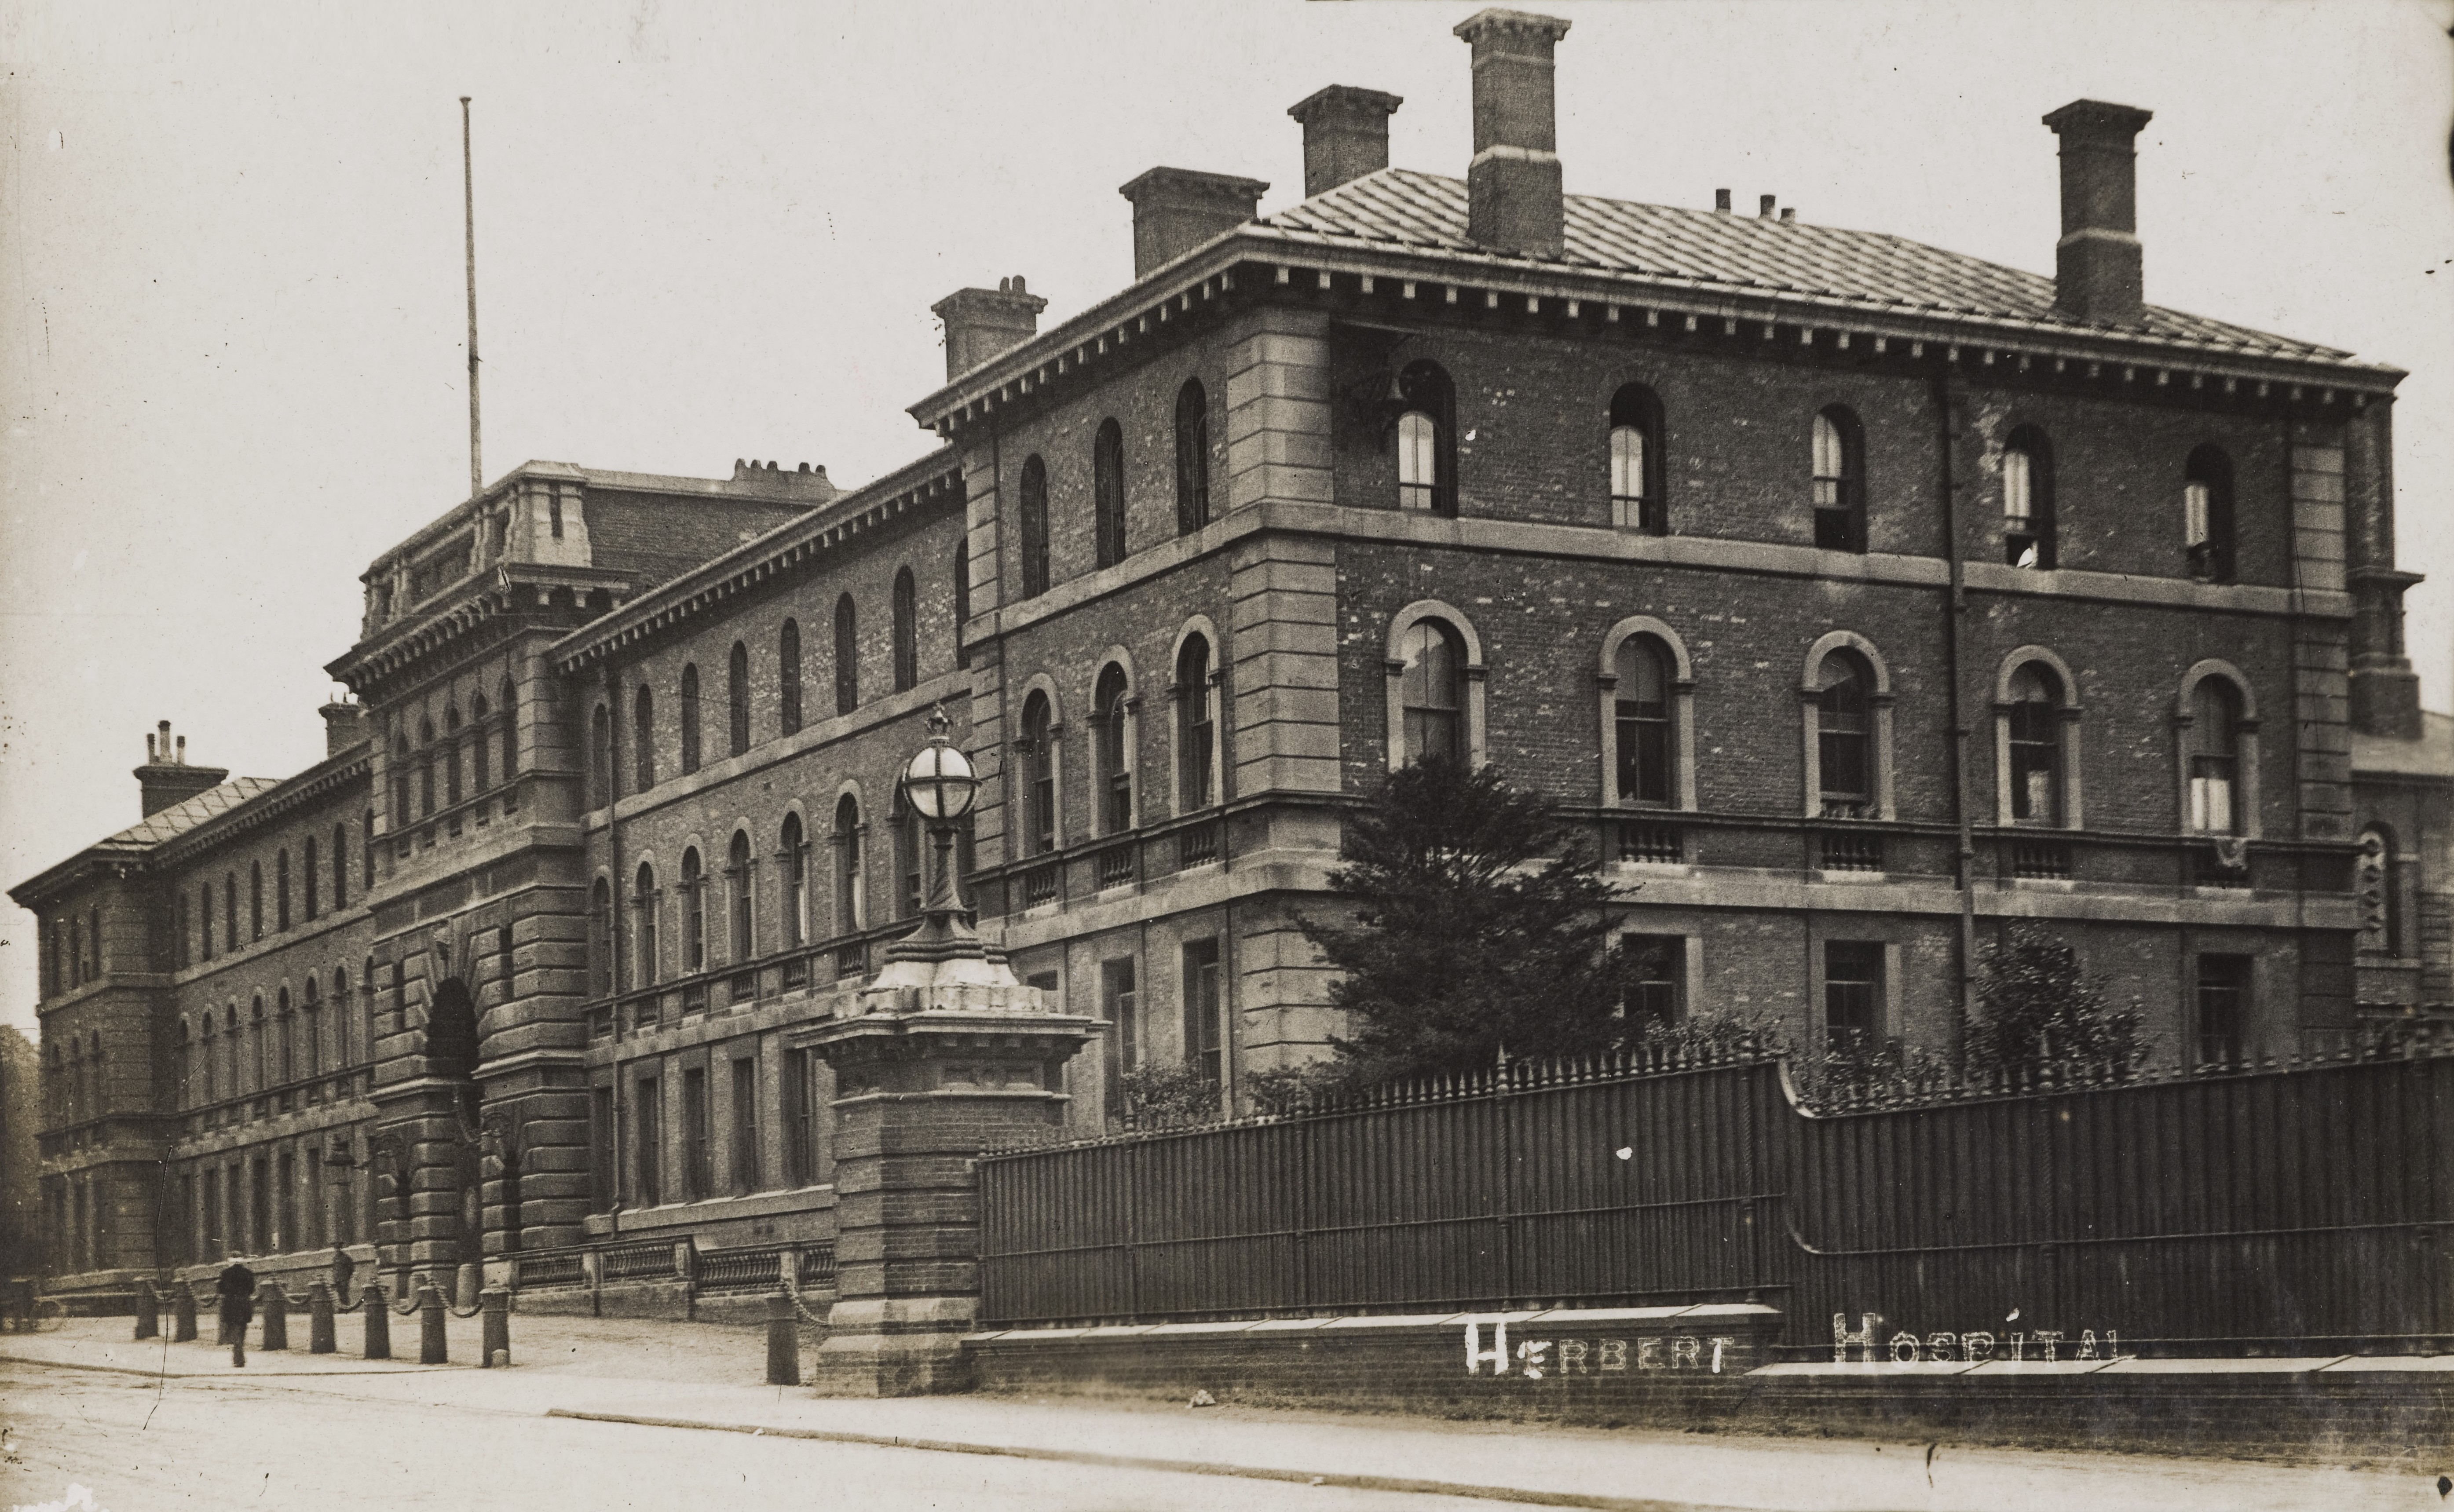 Royal Herbert Hospital, Woolwich, London